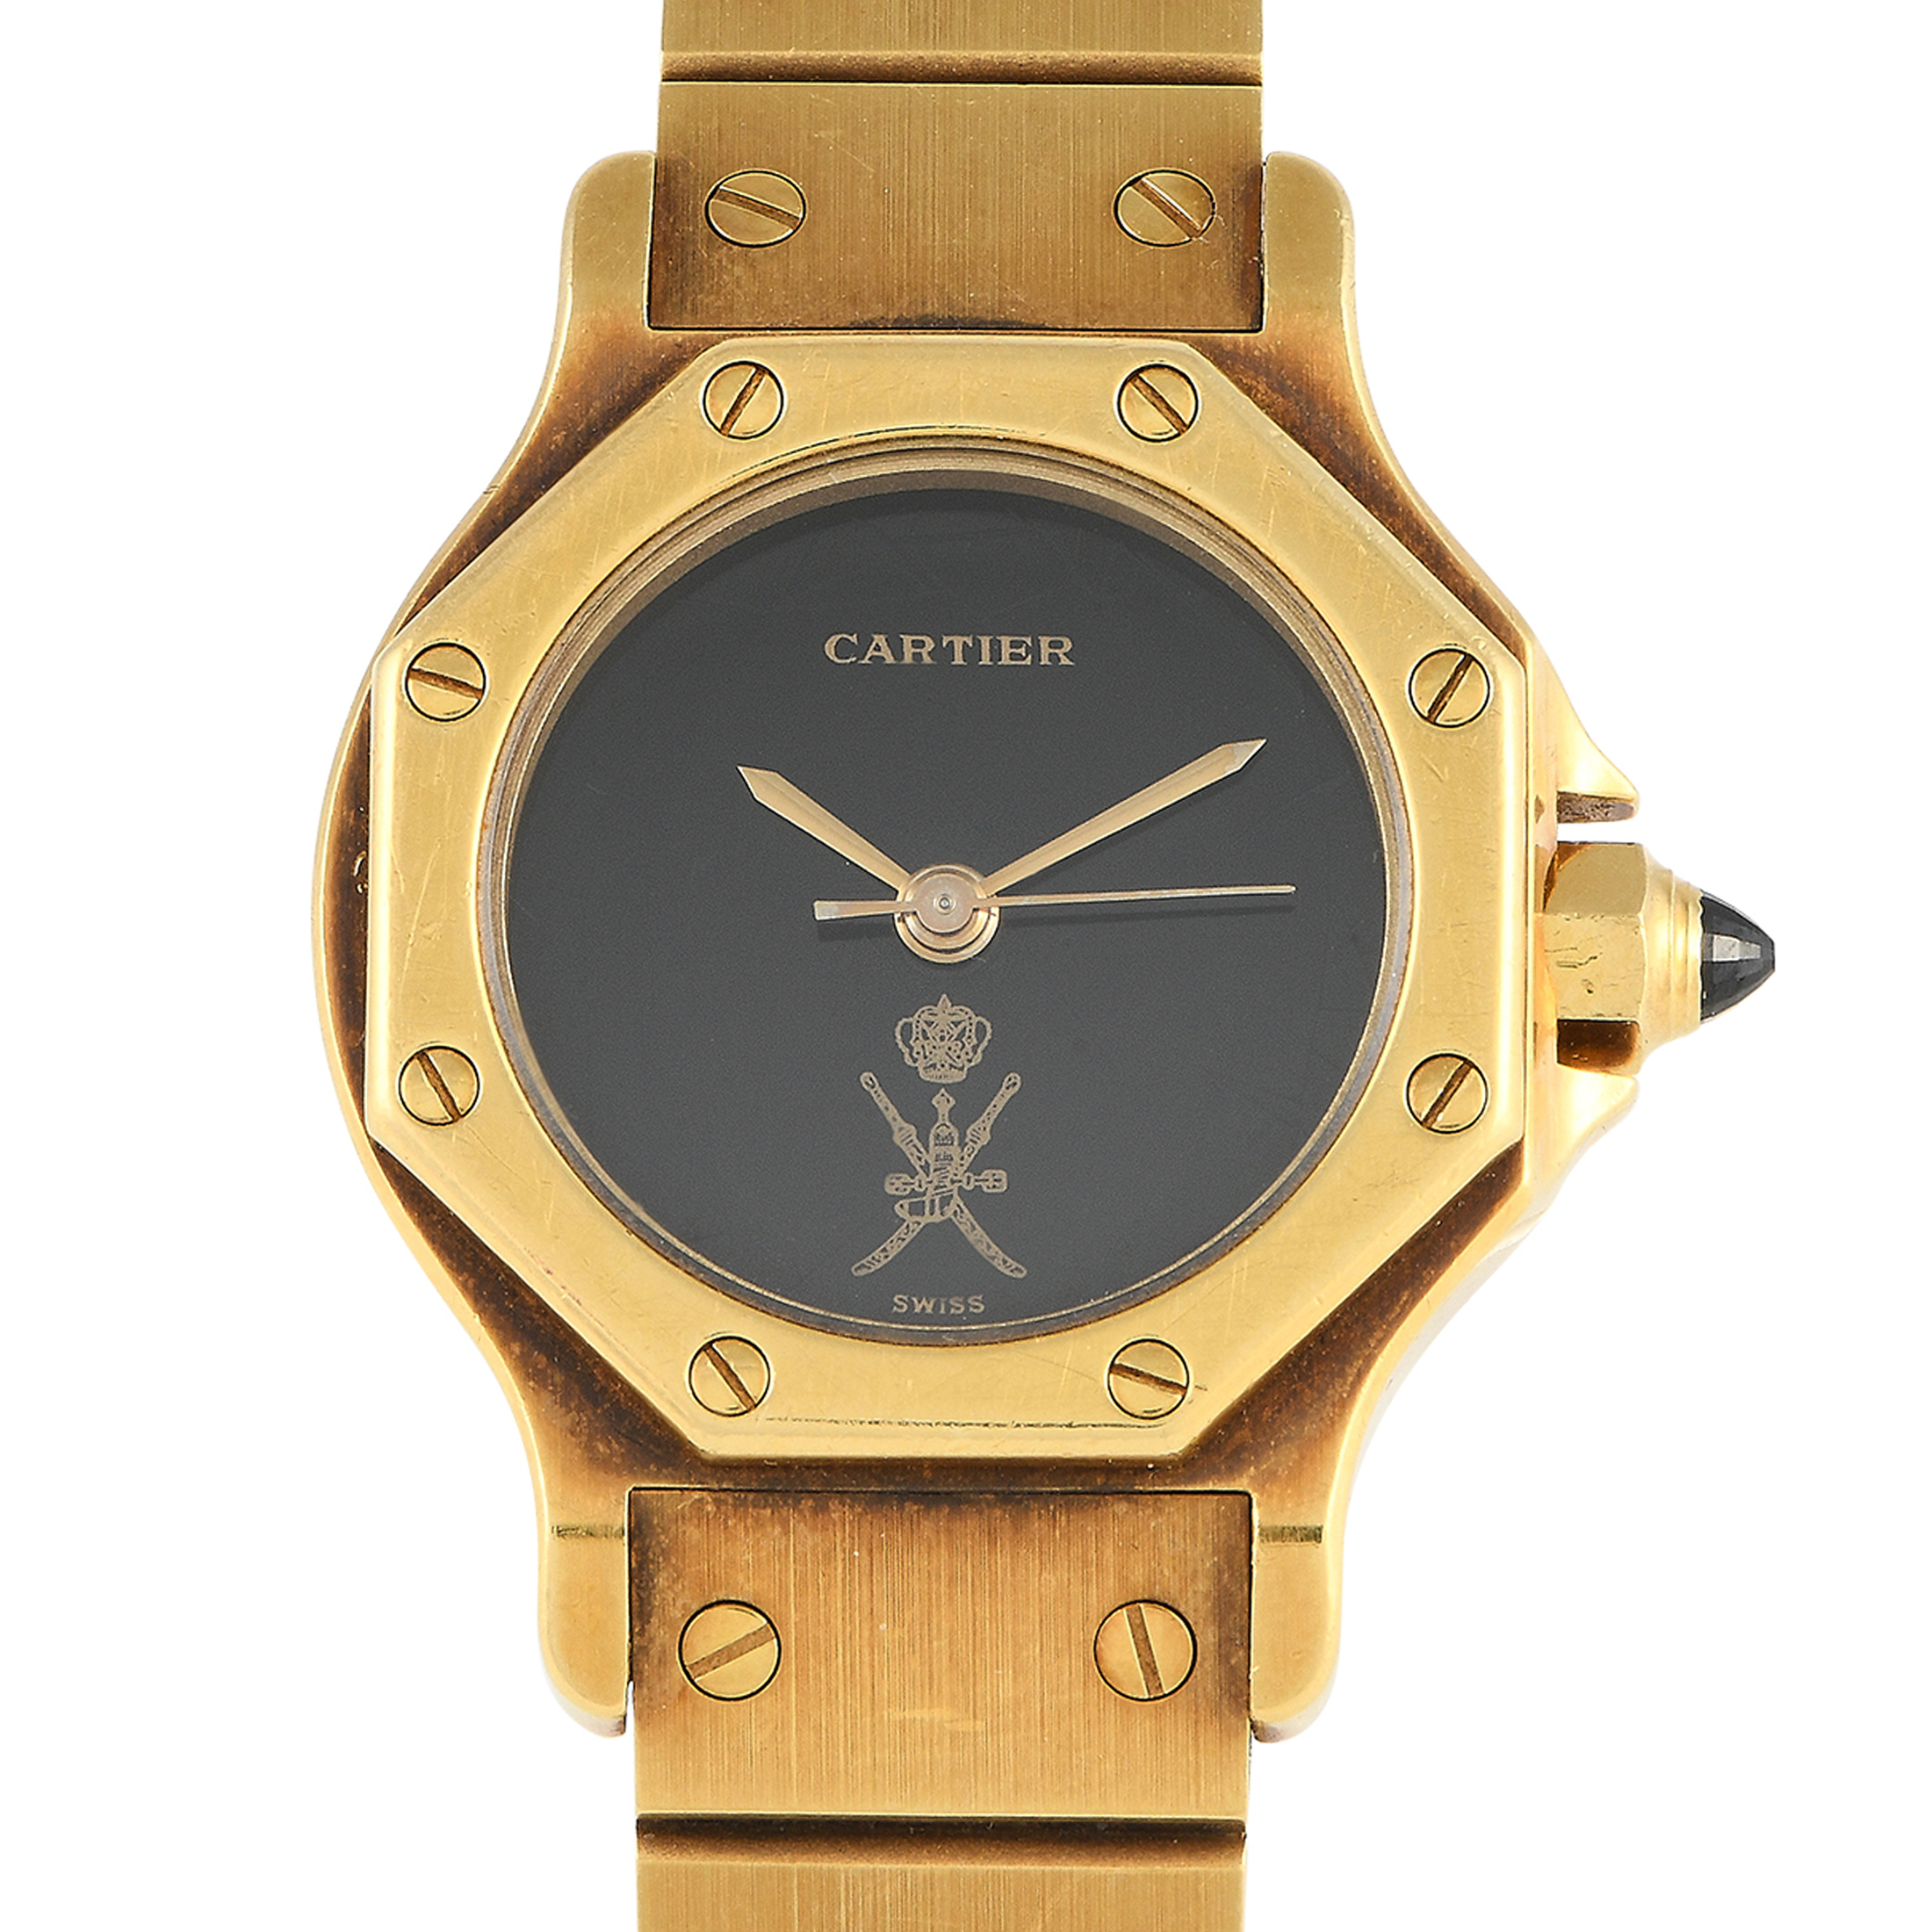 How to Buy a Cartier Love Bracelet — Updated for 2020, by LuxuryBazaar.com